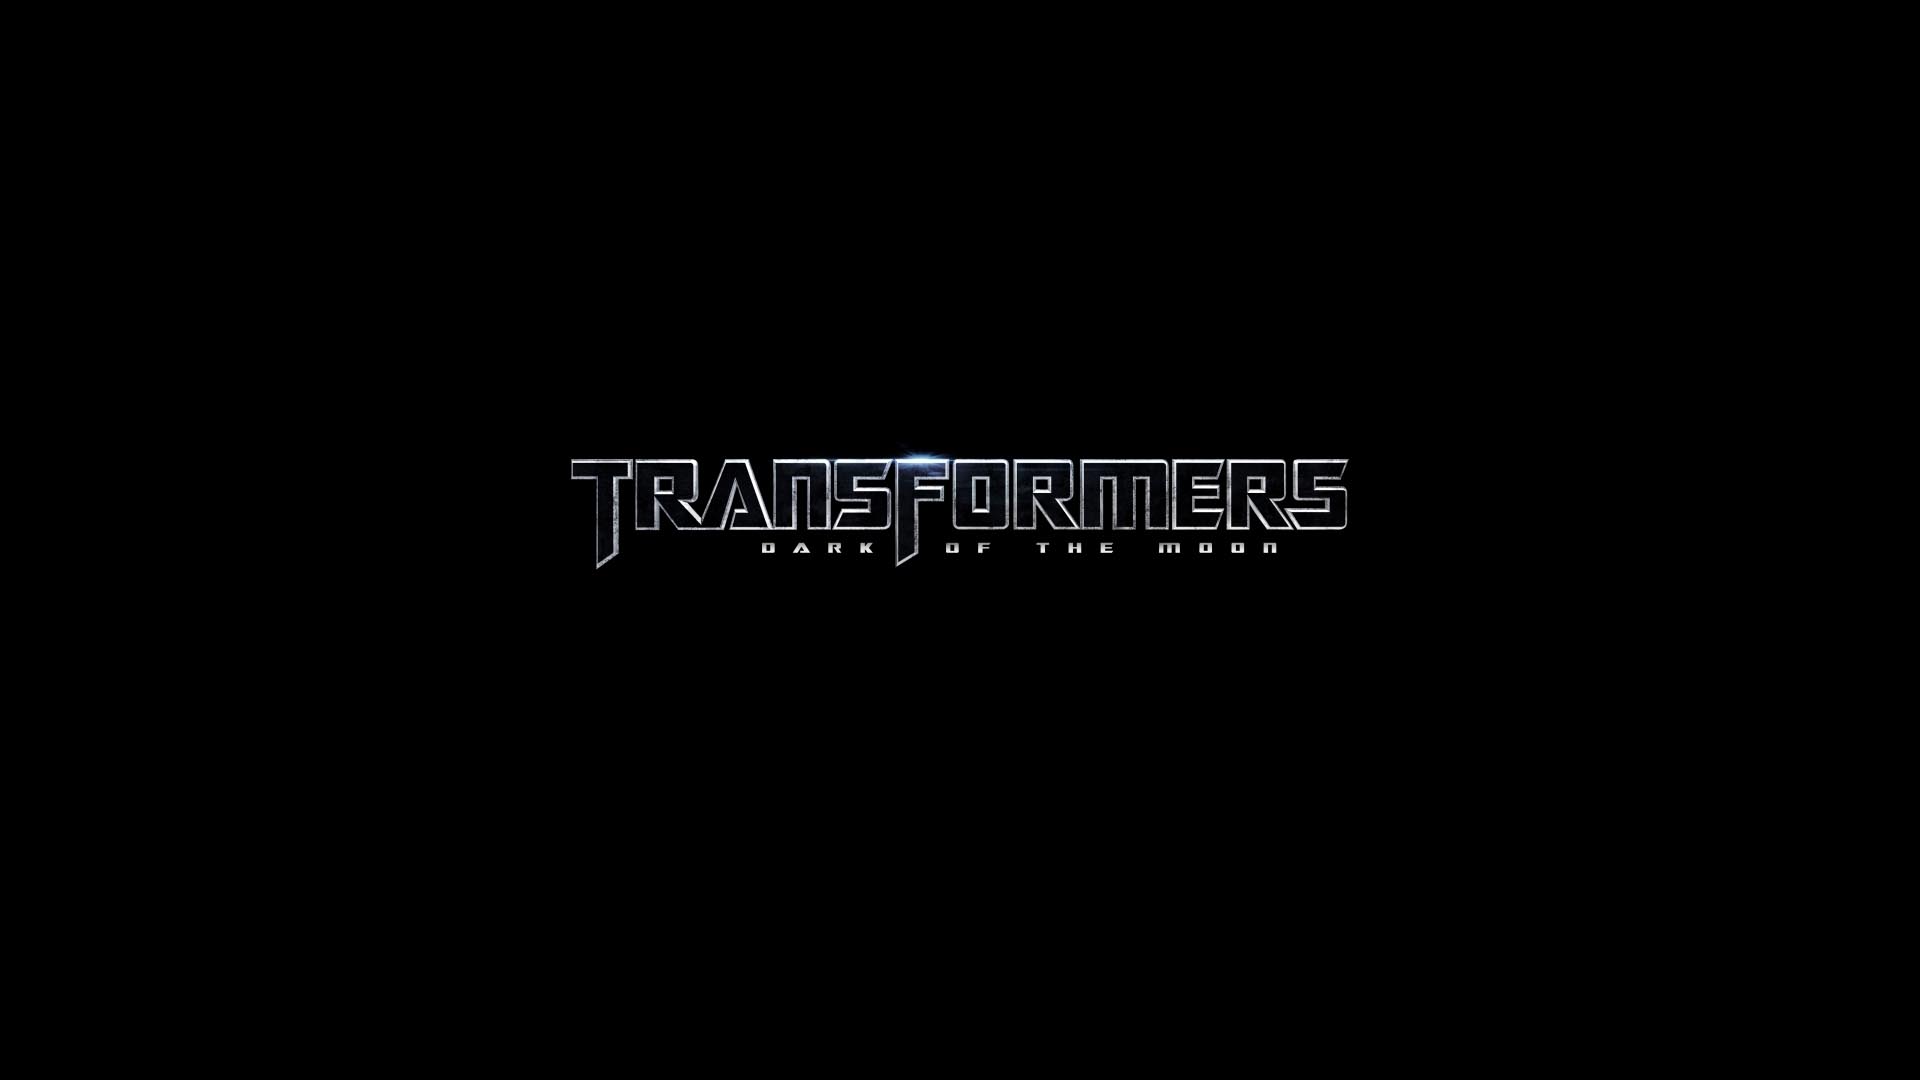 Movie Transformers Dark Of The Moon 1920x1080